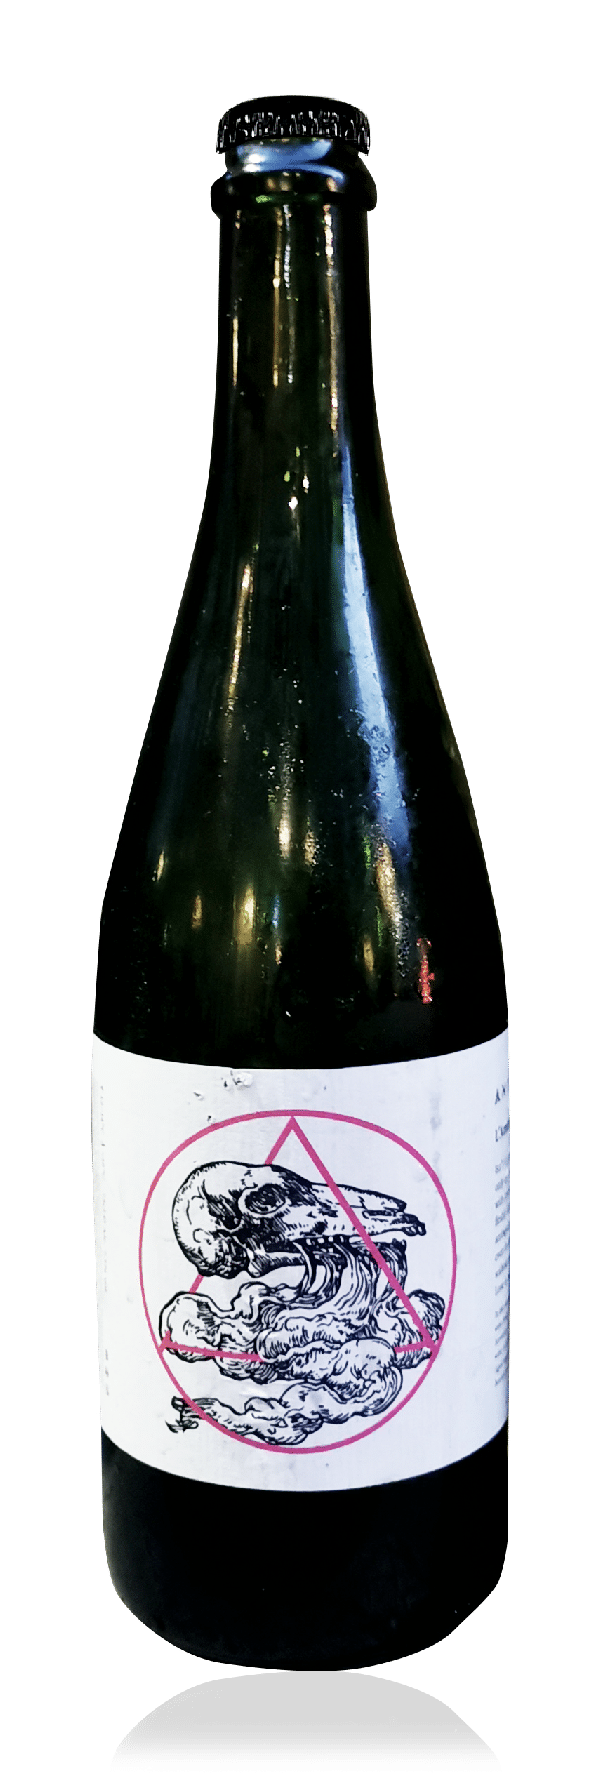 Antidoot L'Ambigu Pinotin flasche